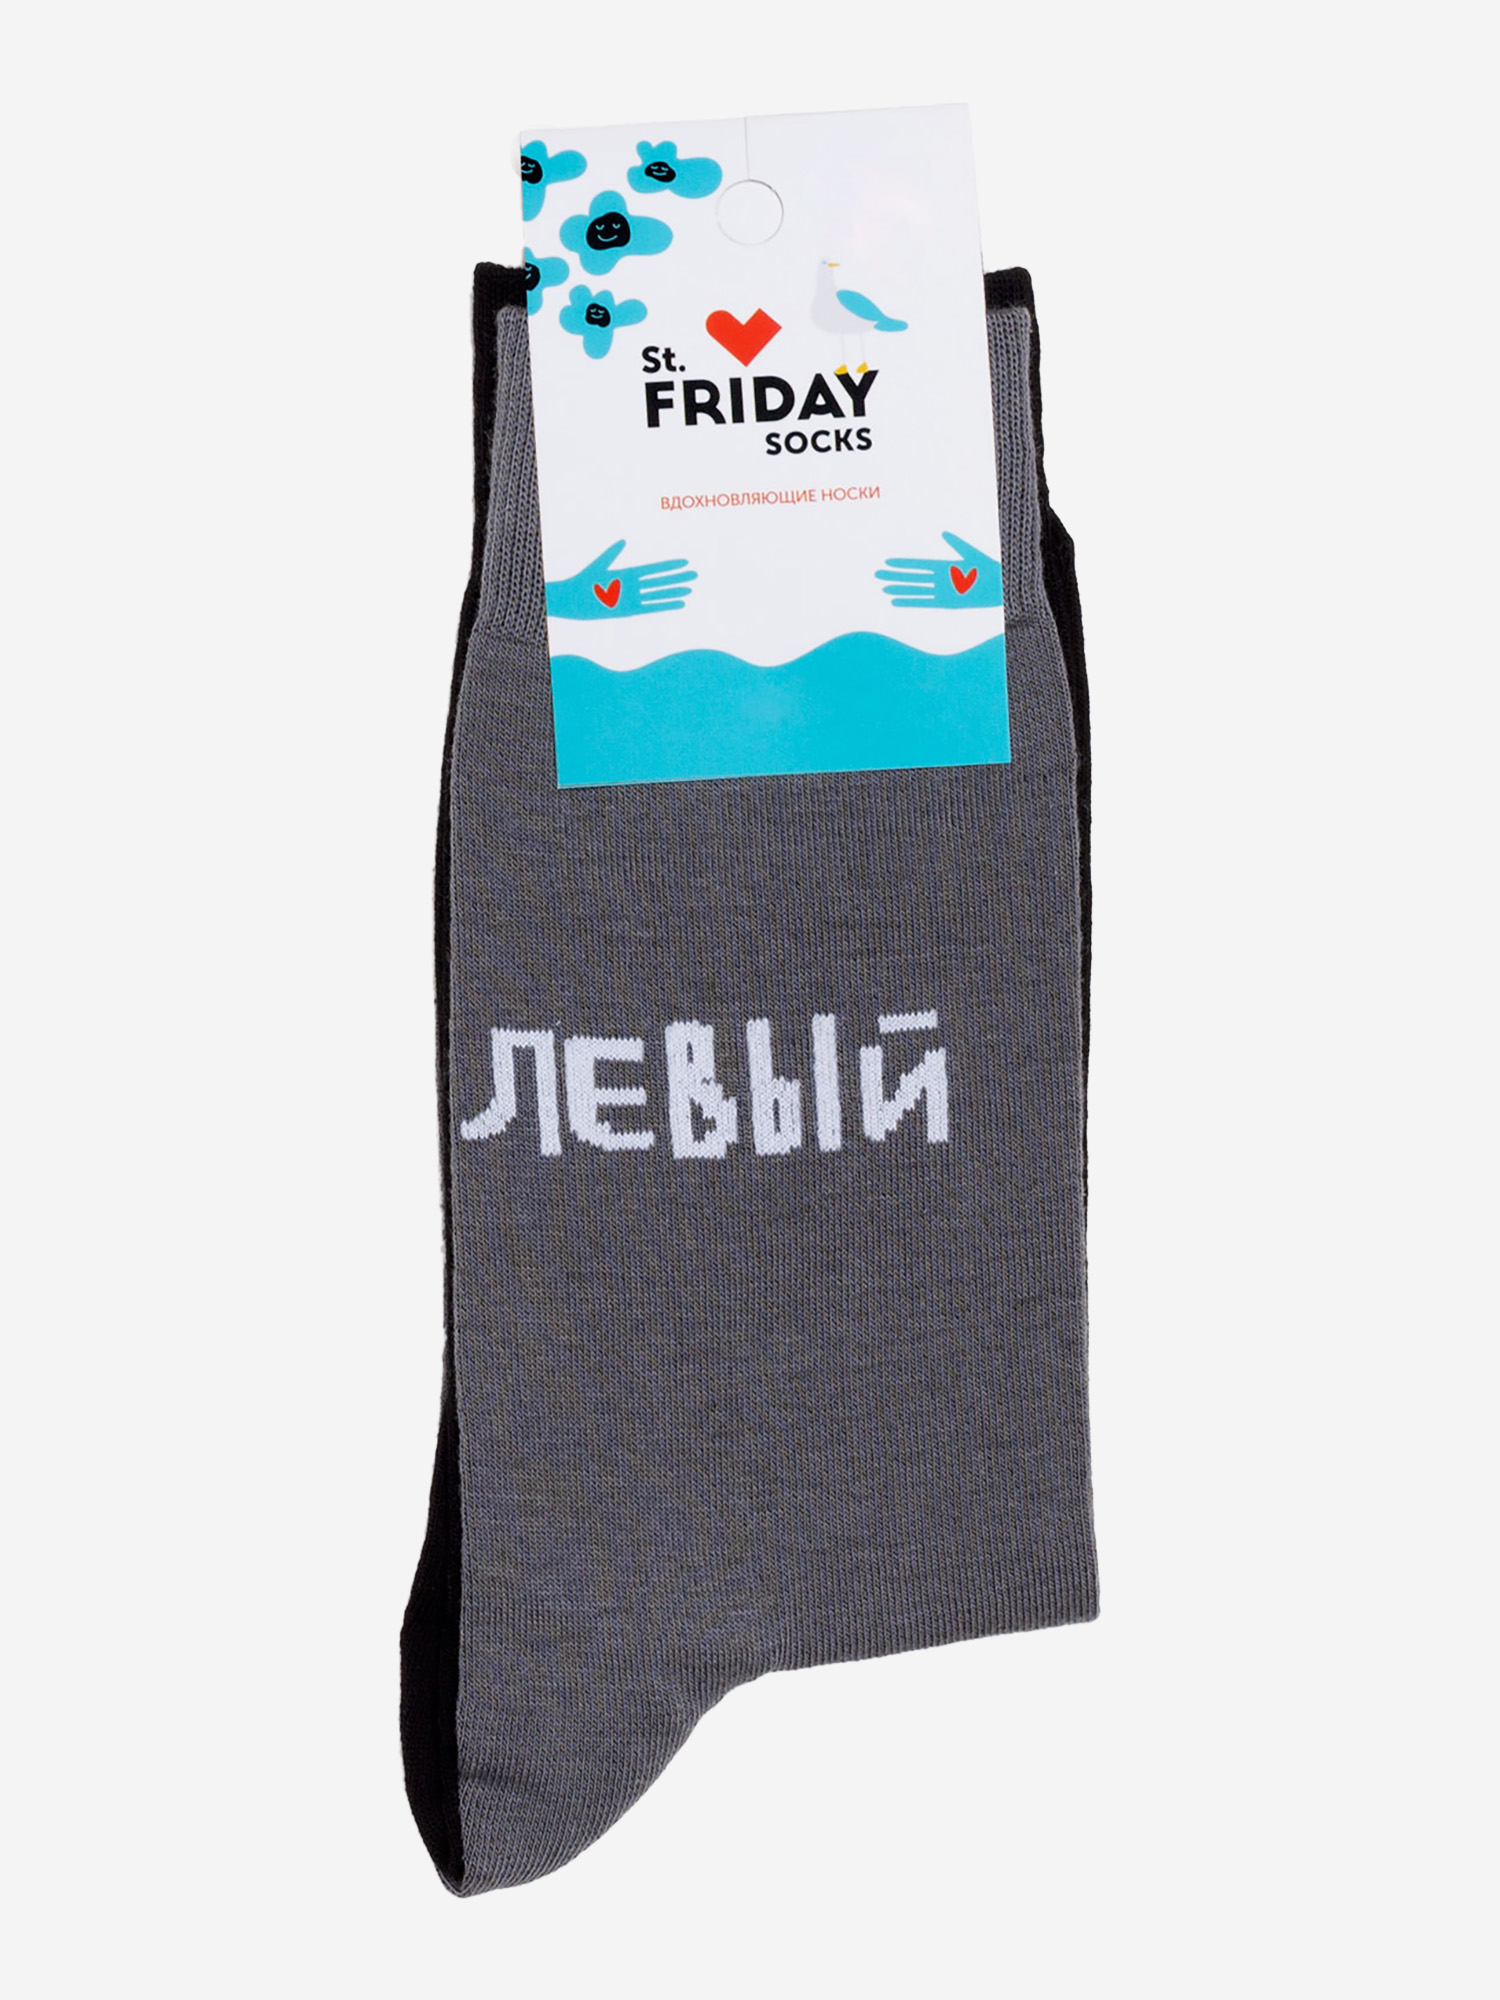 Носки с рисунками St.Friday Socks - Левый, Левый, Серый носки с рисунками st friday socks щас спою серый